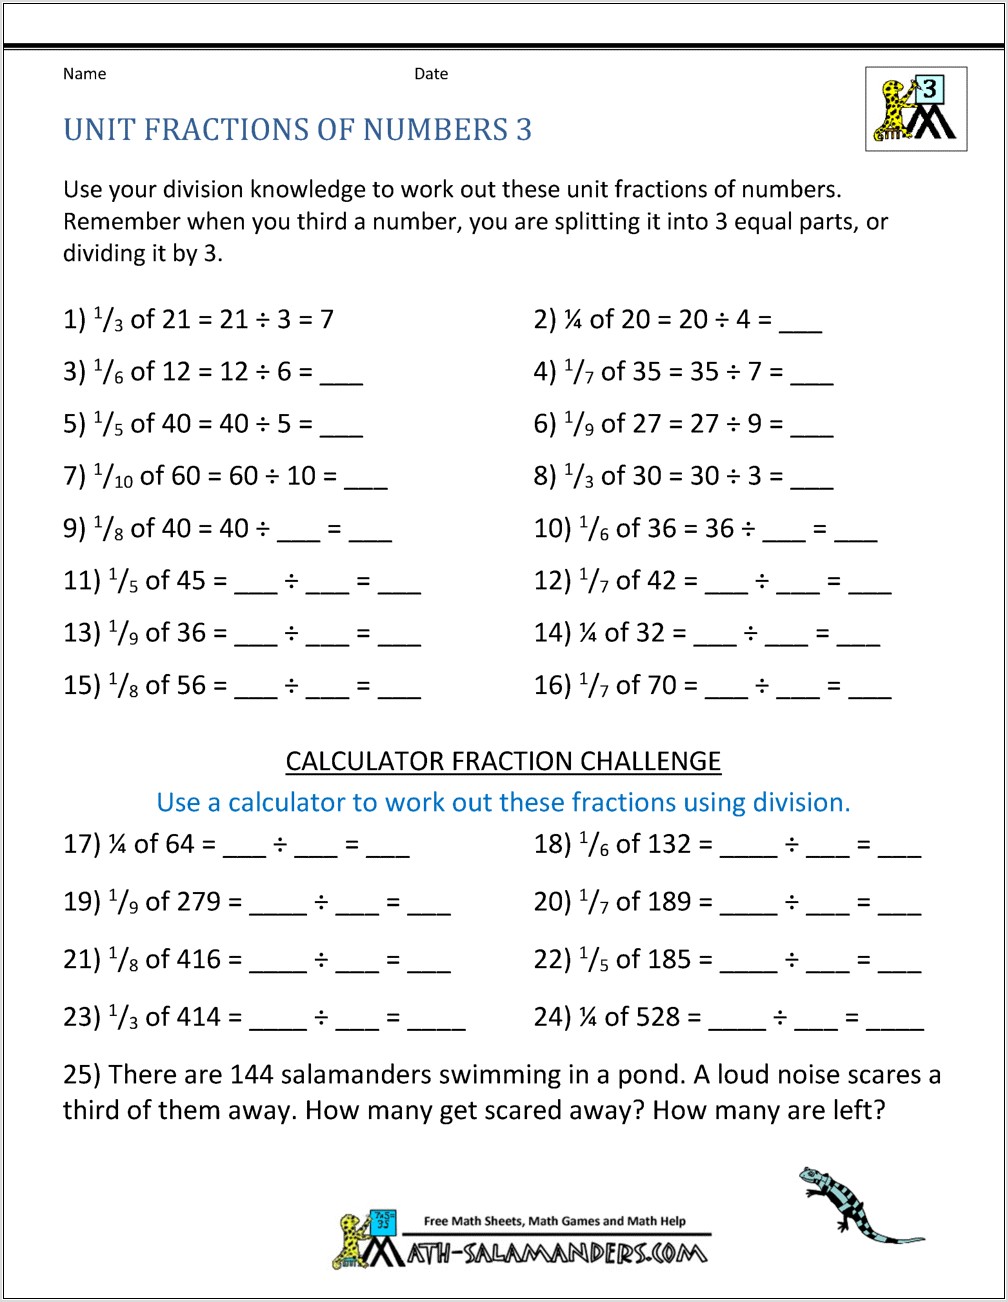 Worksheet Fractions Of Numbers